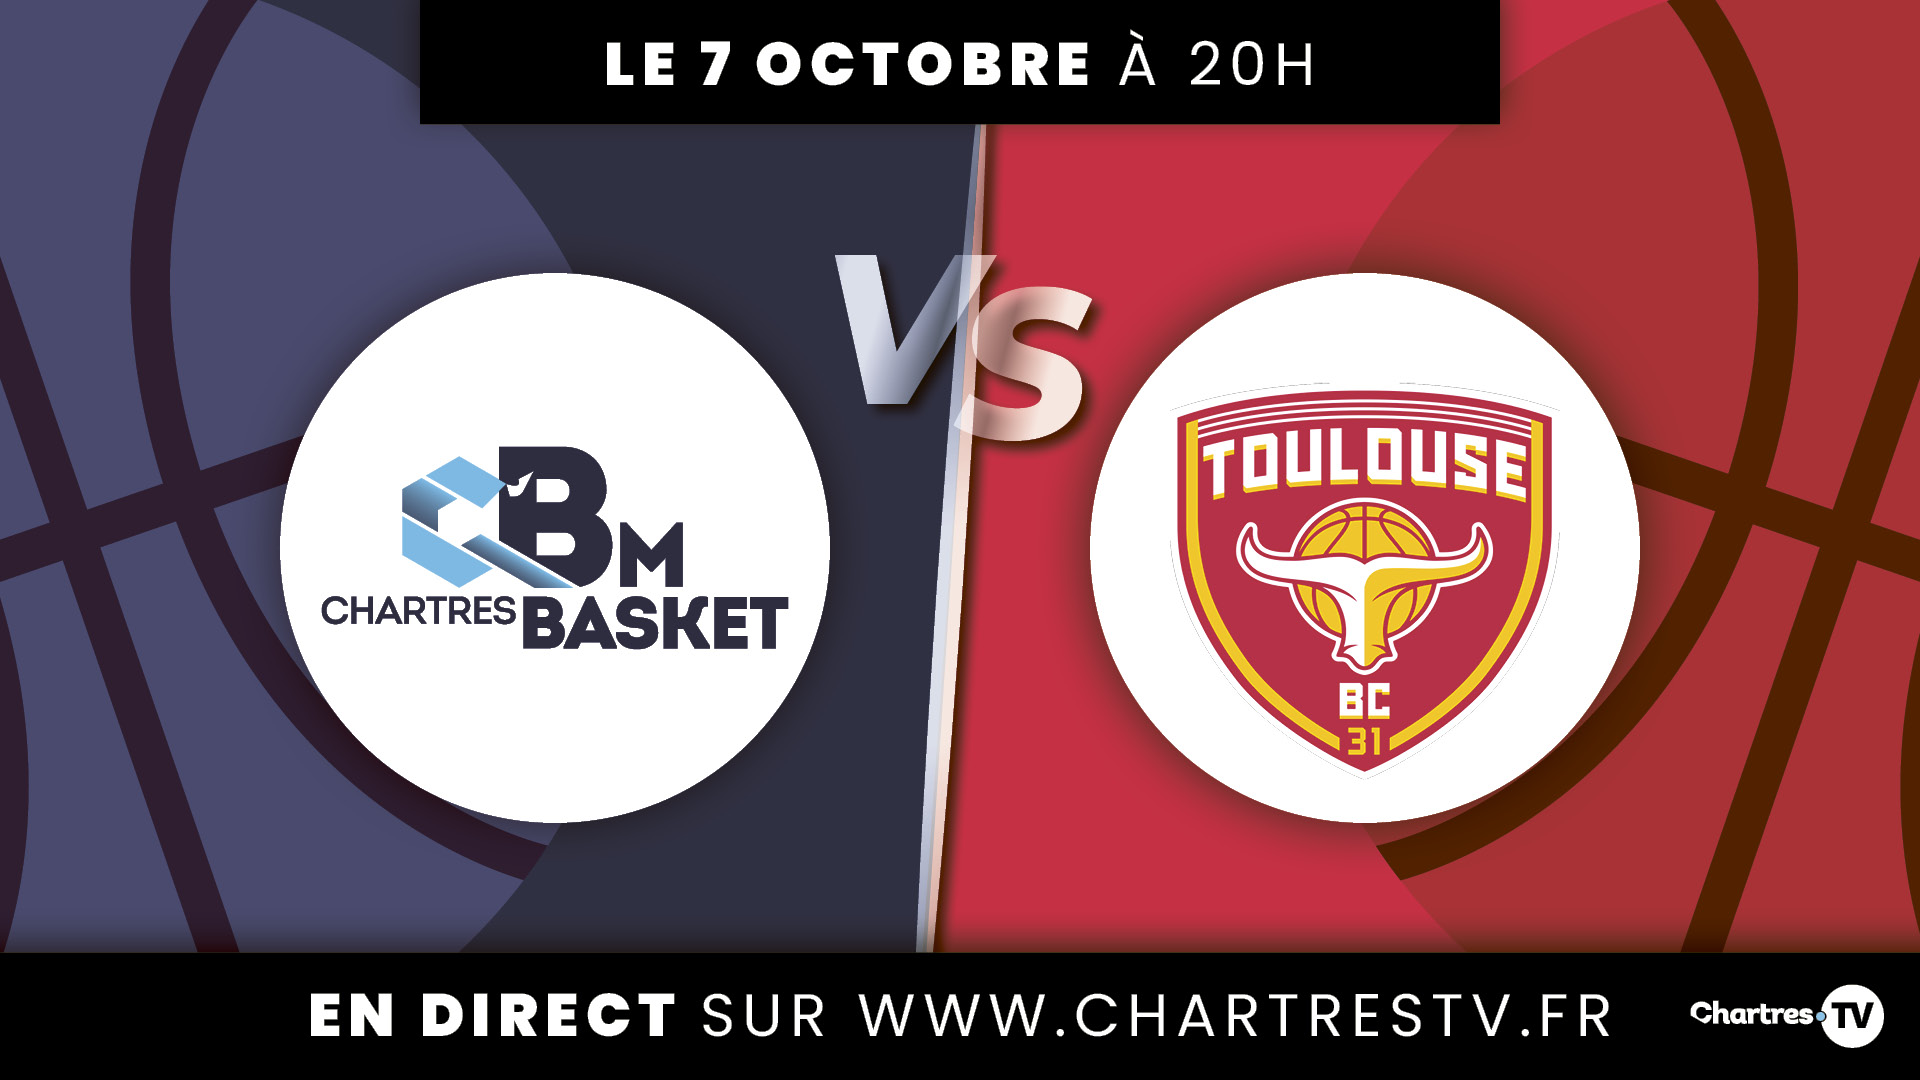 C'Chartres Basket Masculin vs Toulouse Basket Club